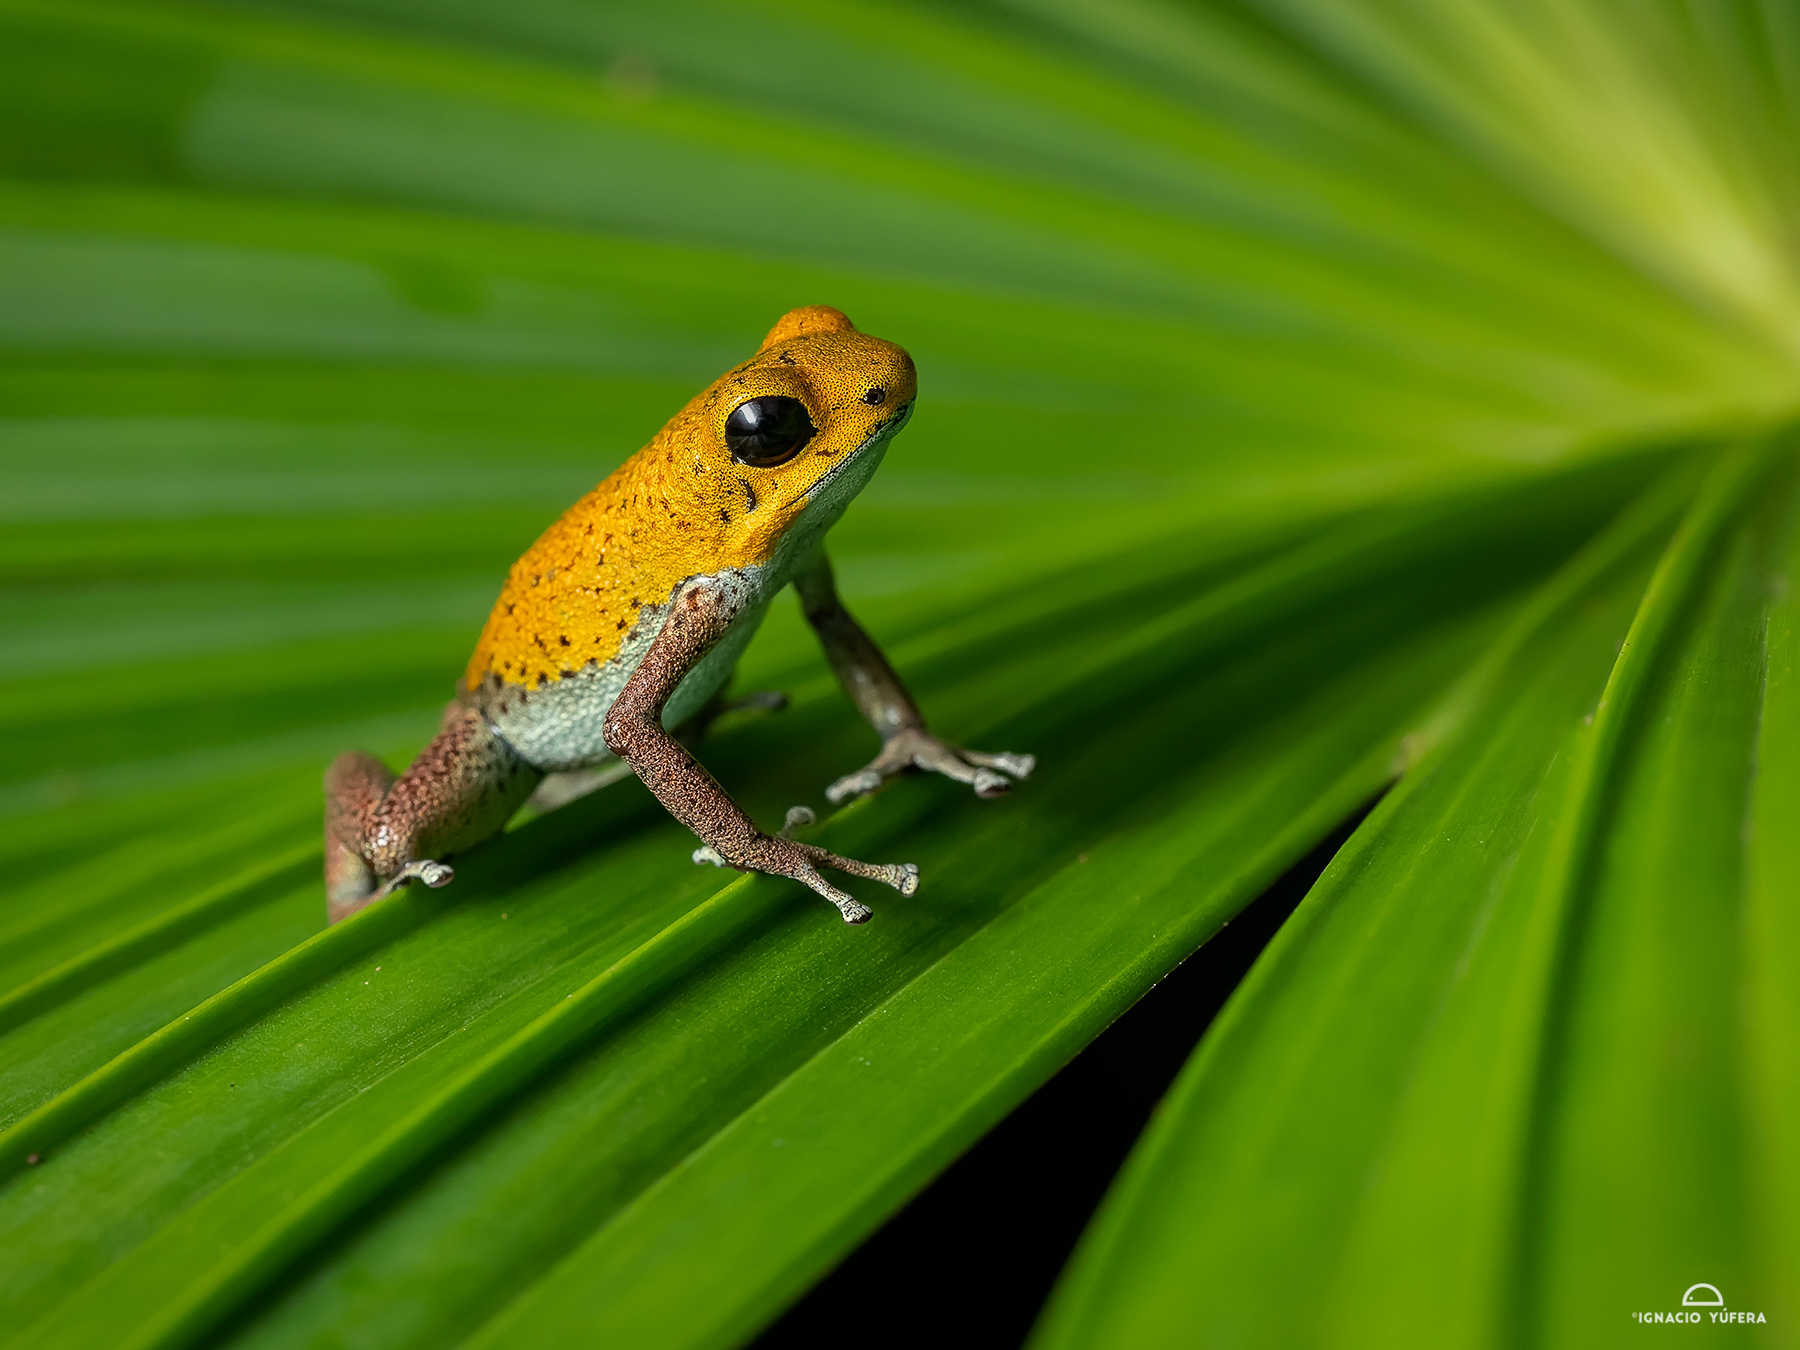 Strawberry Poison Dart Frog (Oophaga pumilio), “Bisira morph”, Fortuna, Panama